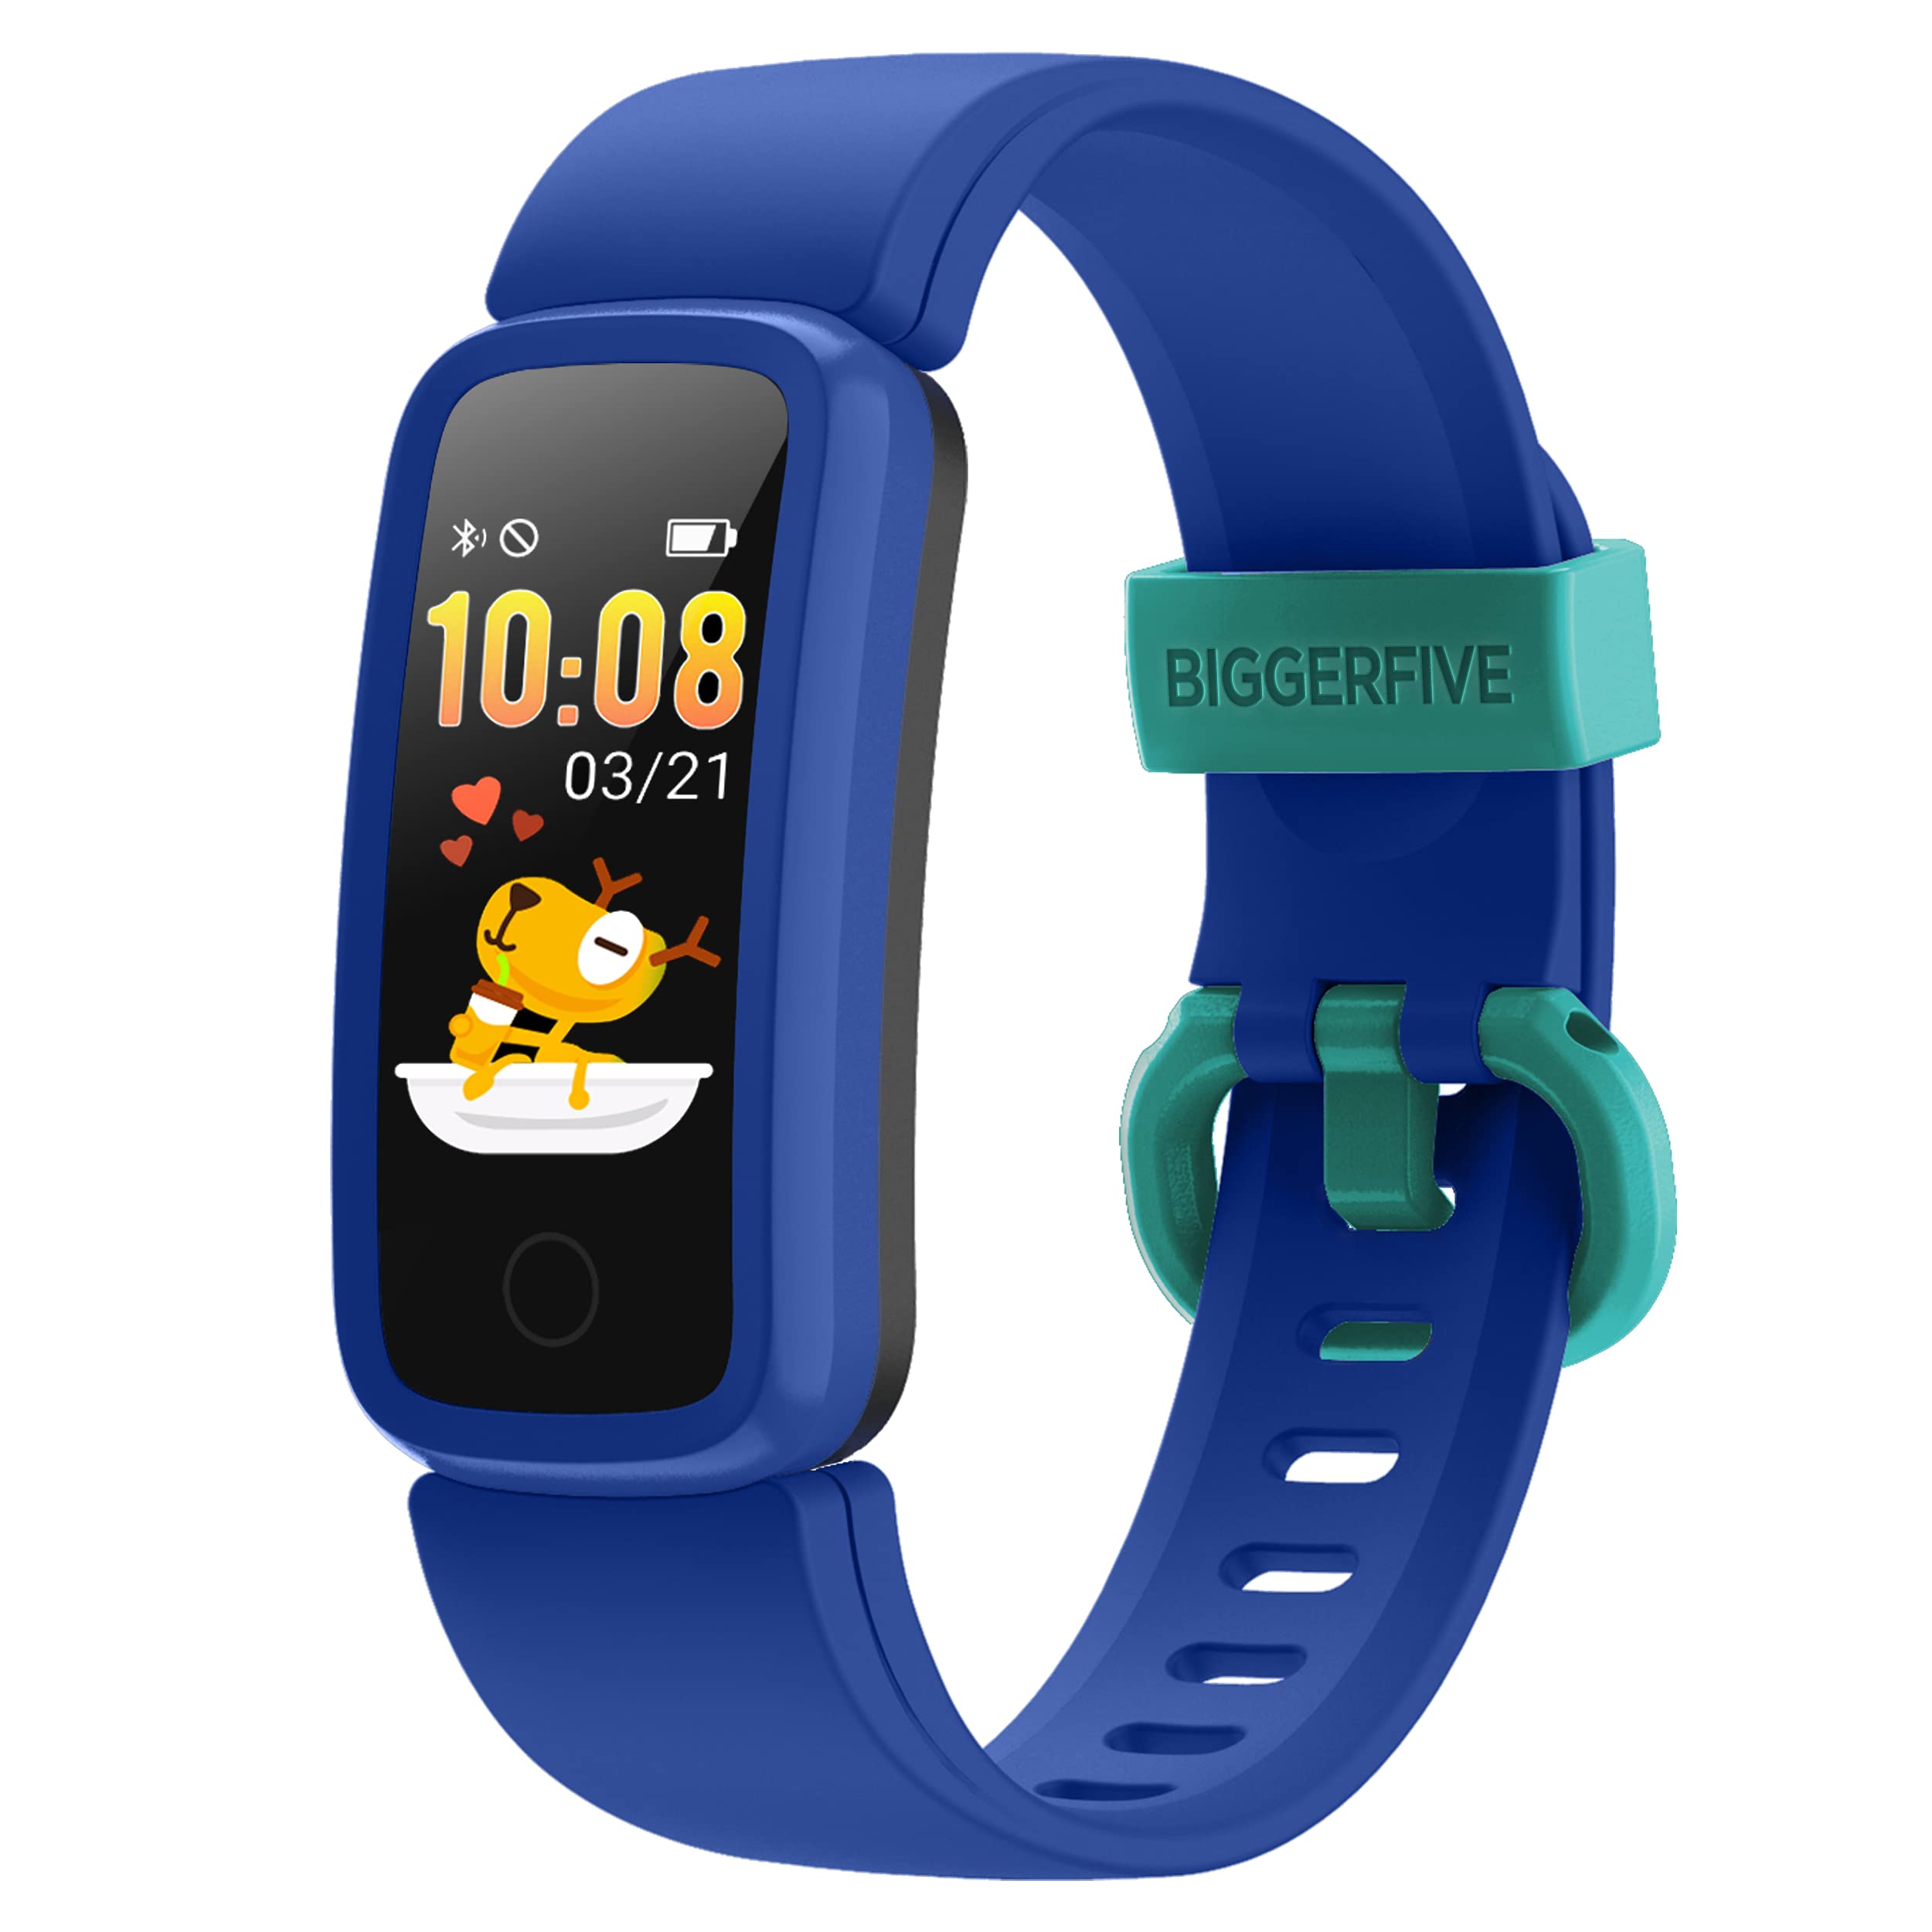 PGD Smart Watch 4G WiFi GPS| Alibaba.com